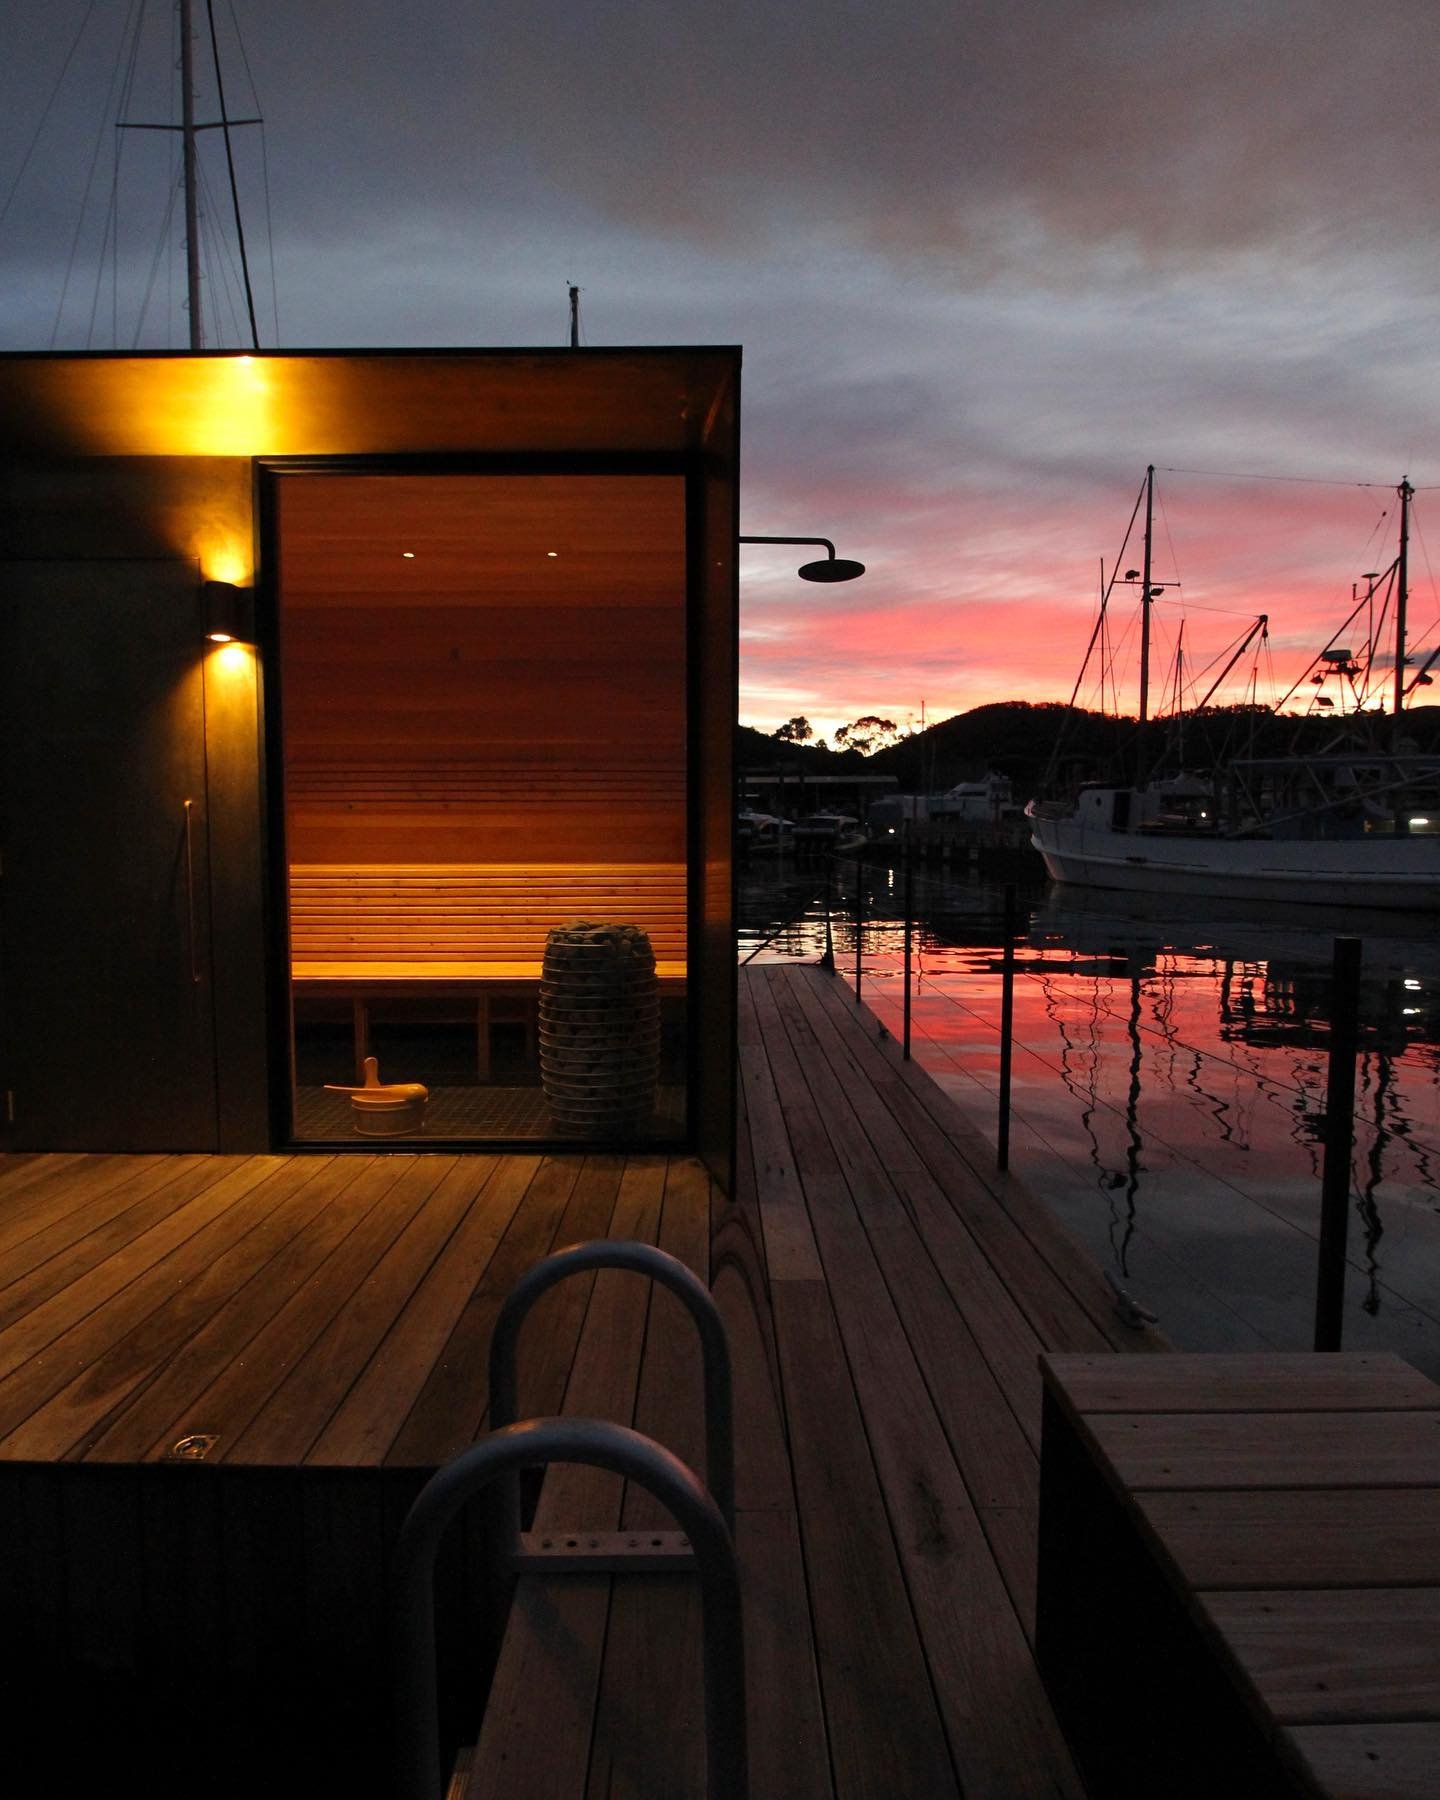 Red at night, Sauna delight 🖤

#sauna #saunaboat #boatsauna #floatingsauna #floatingsaunatasmania #tasmania